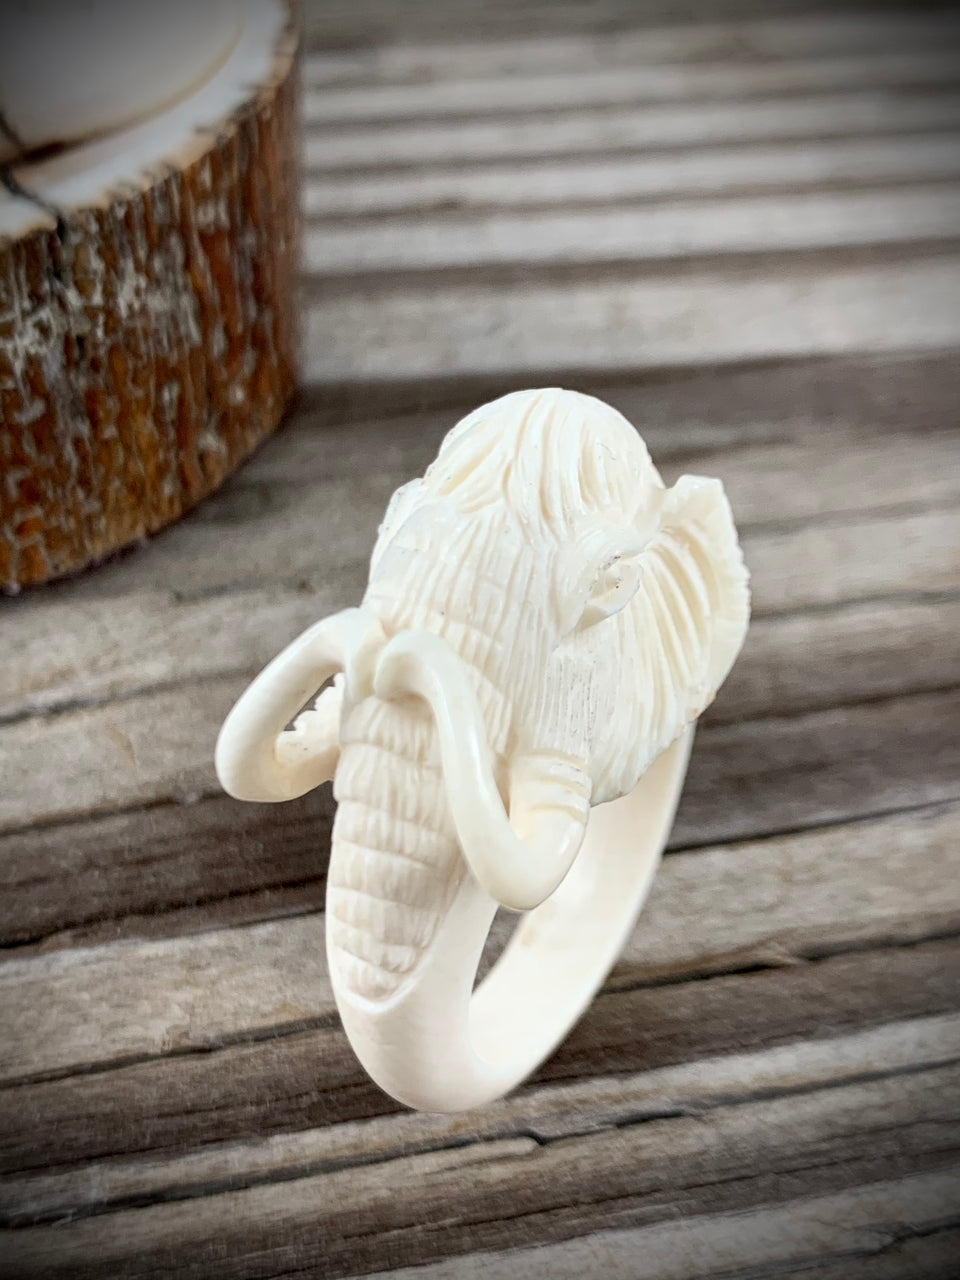 Mammoth Ivory Jewelry – Fish Creek Company